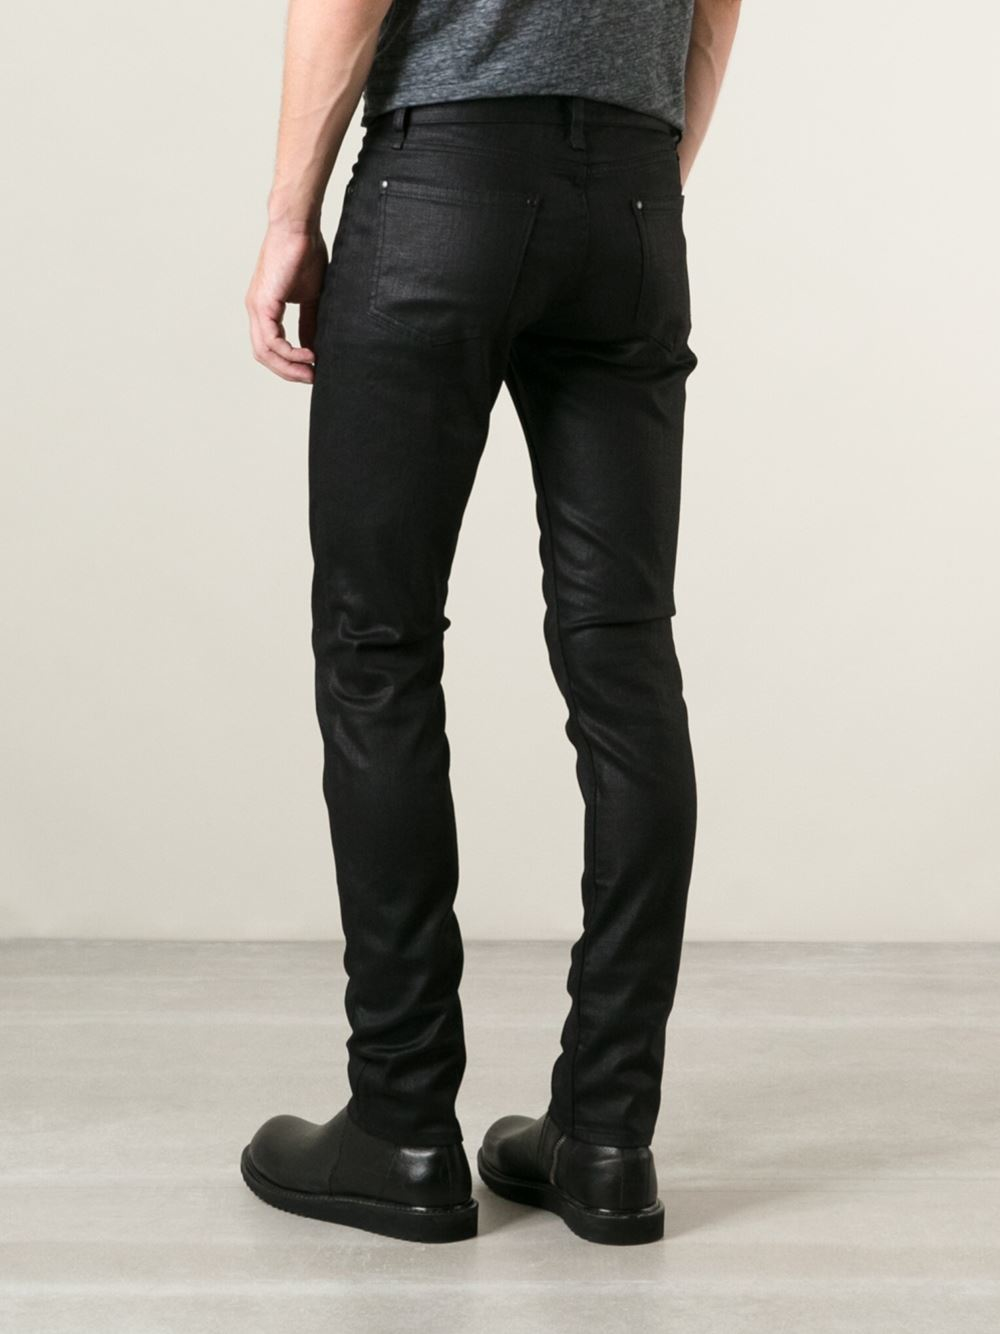 Lyst - John Varvatos Coated Skinny Jeans in Black for Men